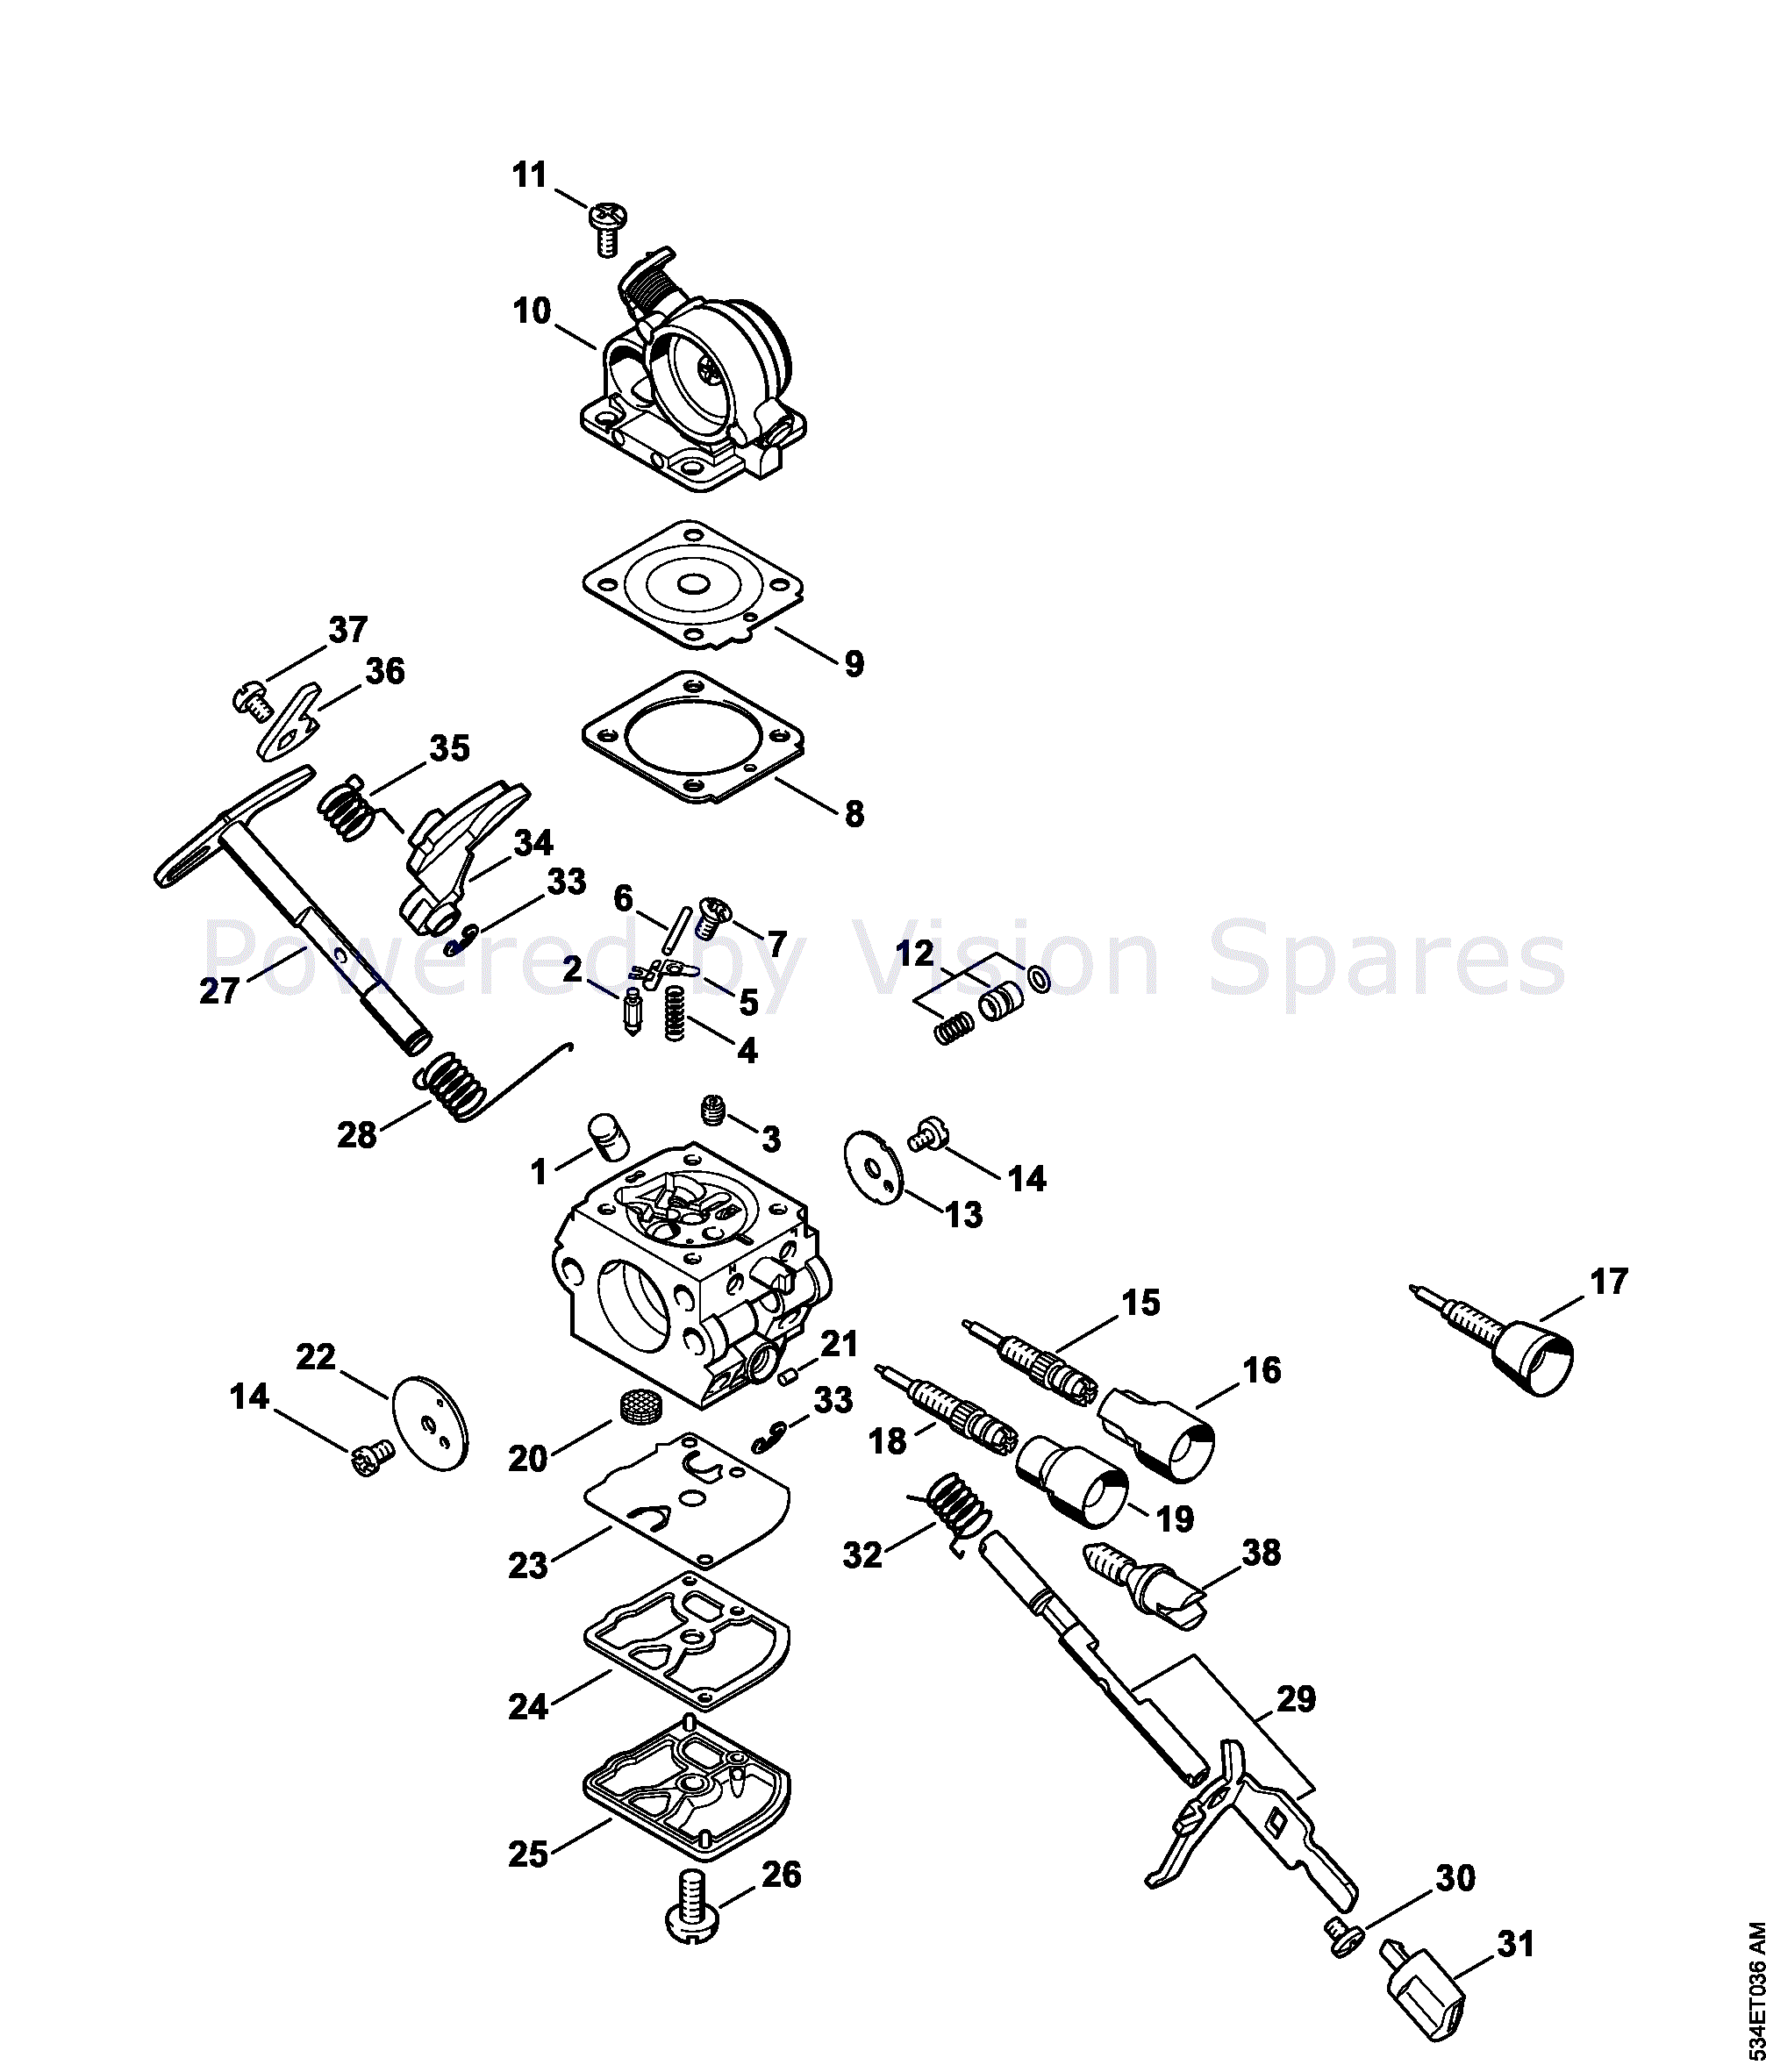 [DIAGRAM] Stihl Farm Boss Ms 290 Parts Diagram